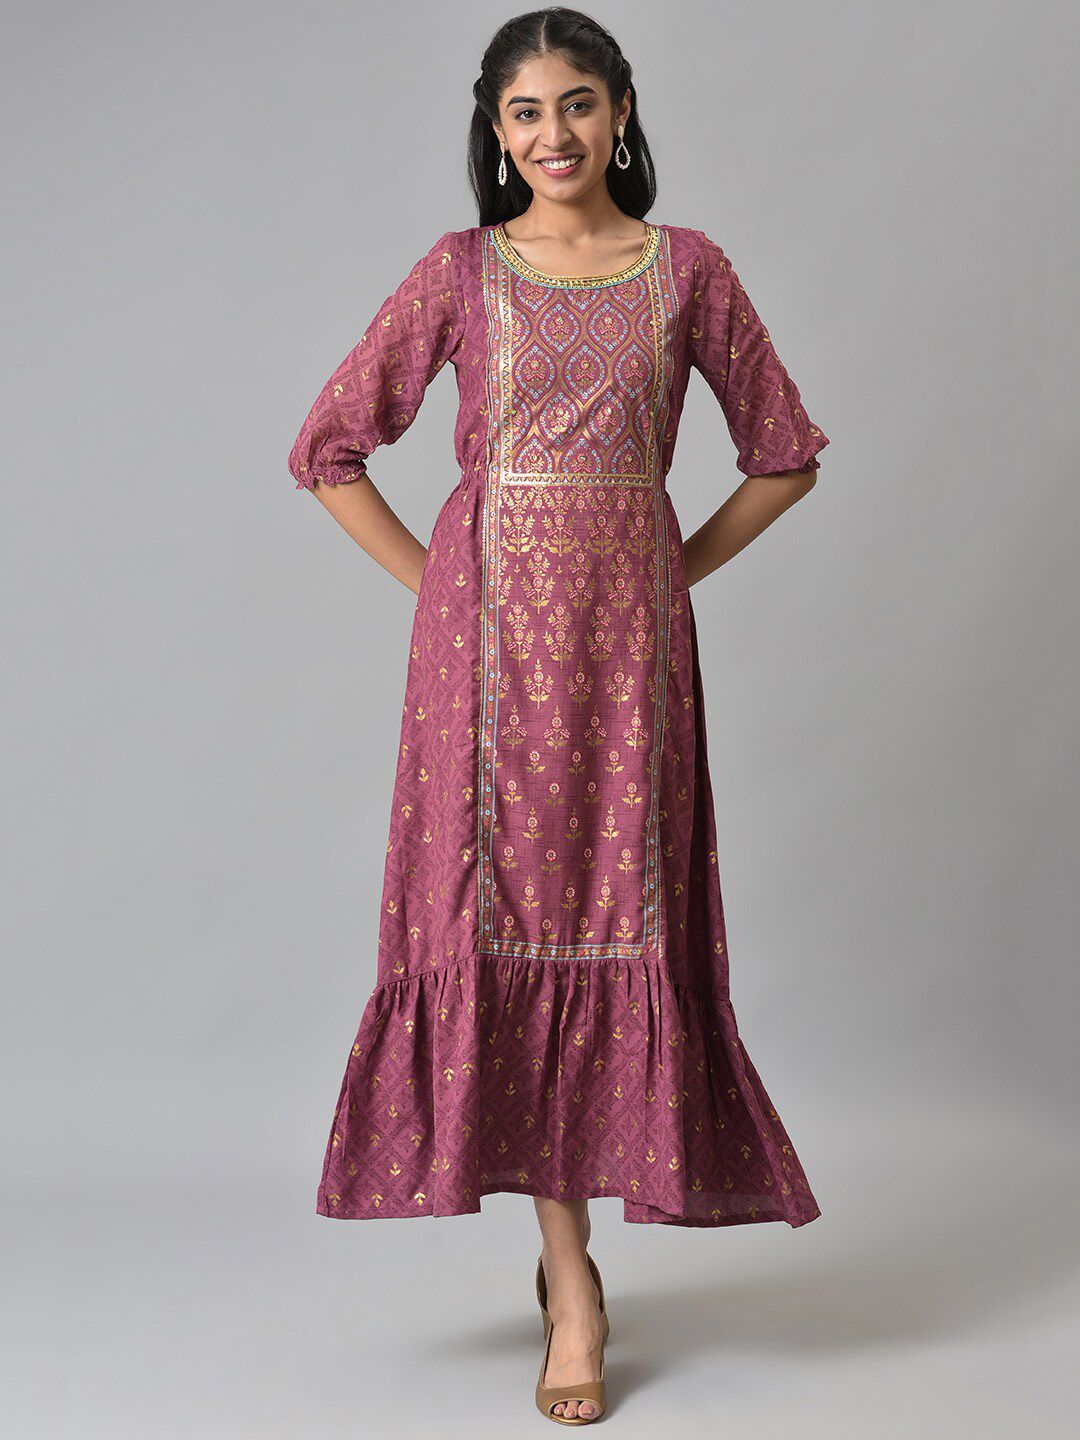 AURELIA Maroon Ethnic Motifs A-Line Maxi Dress Price in India